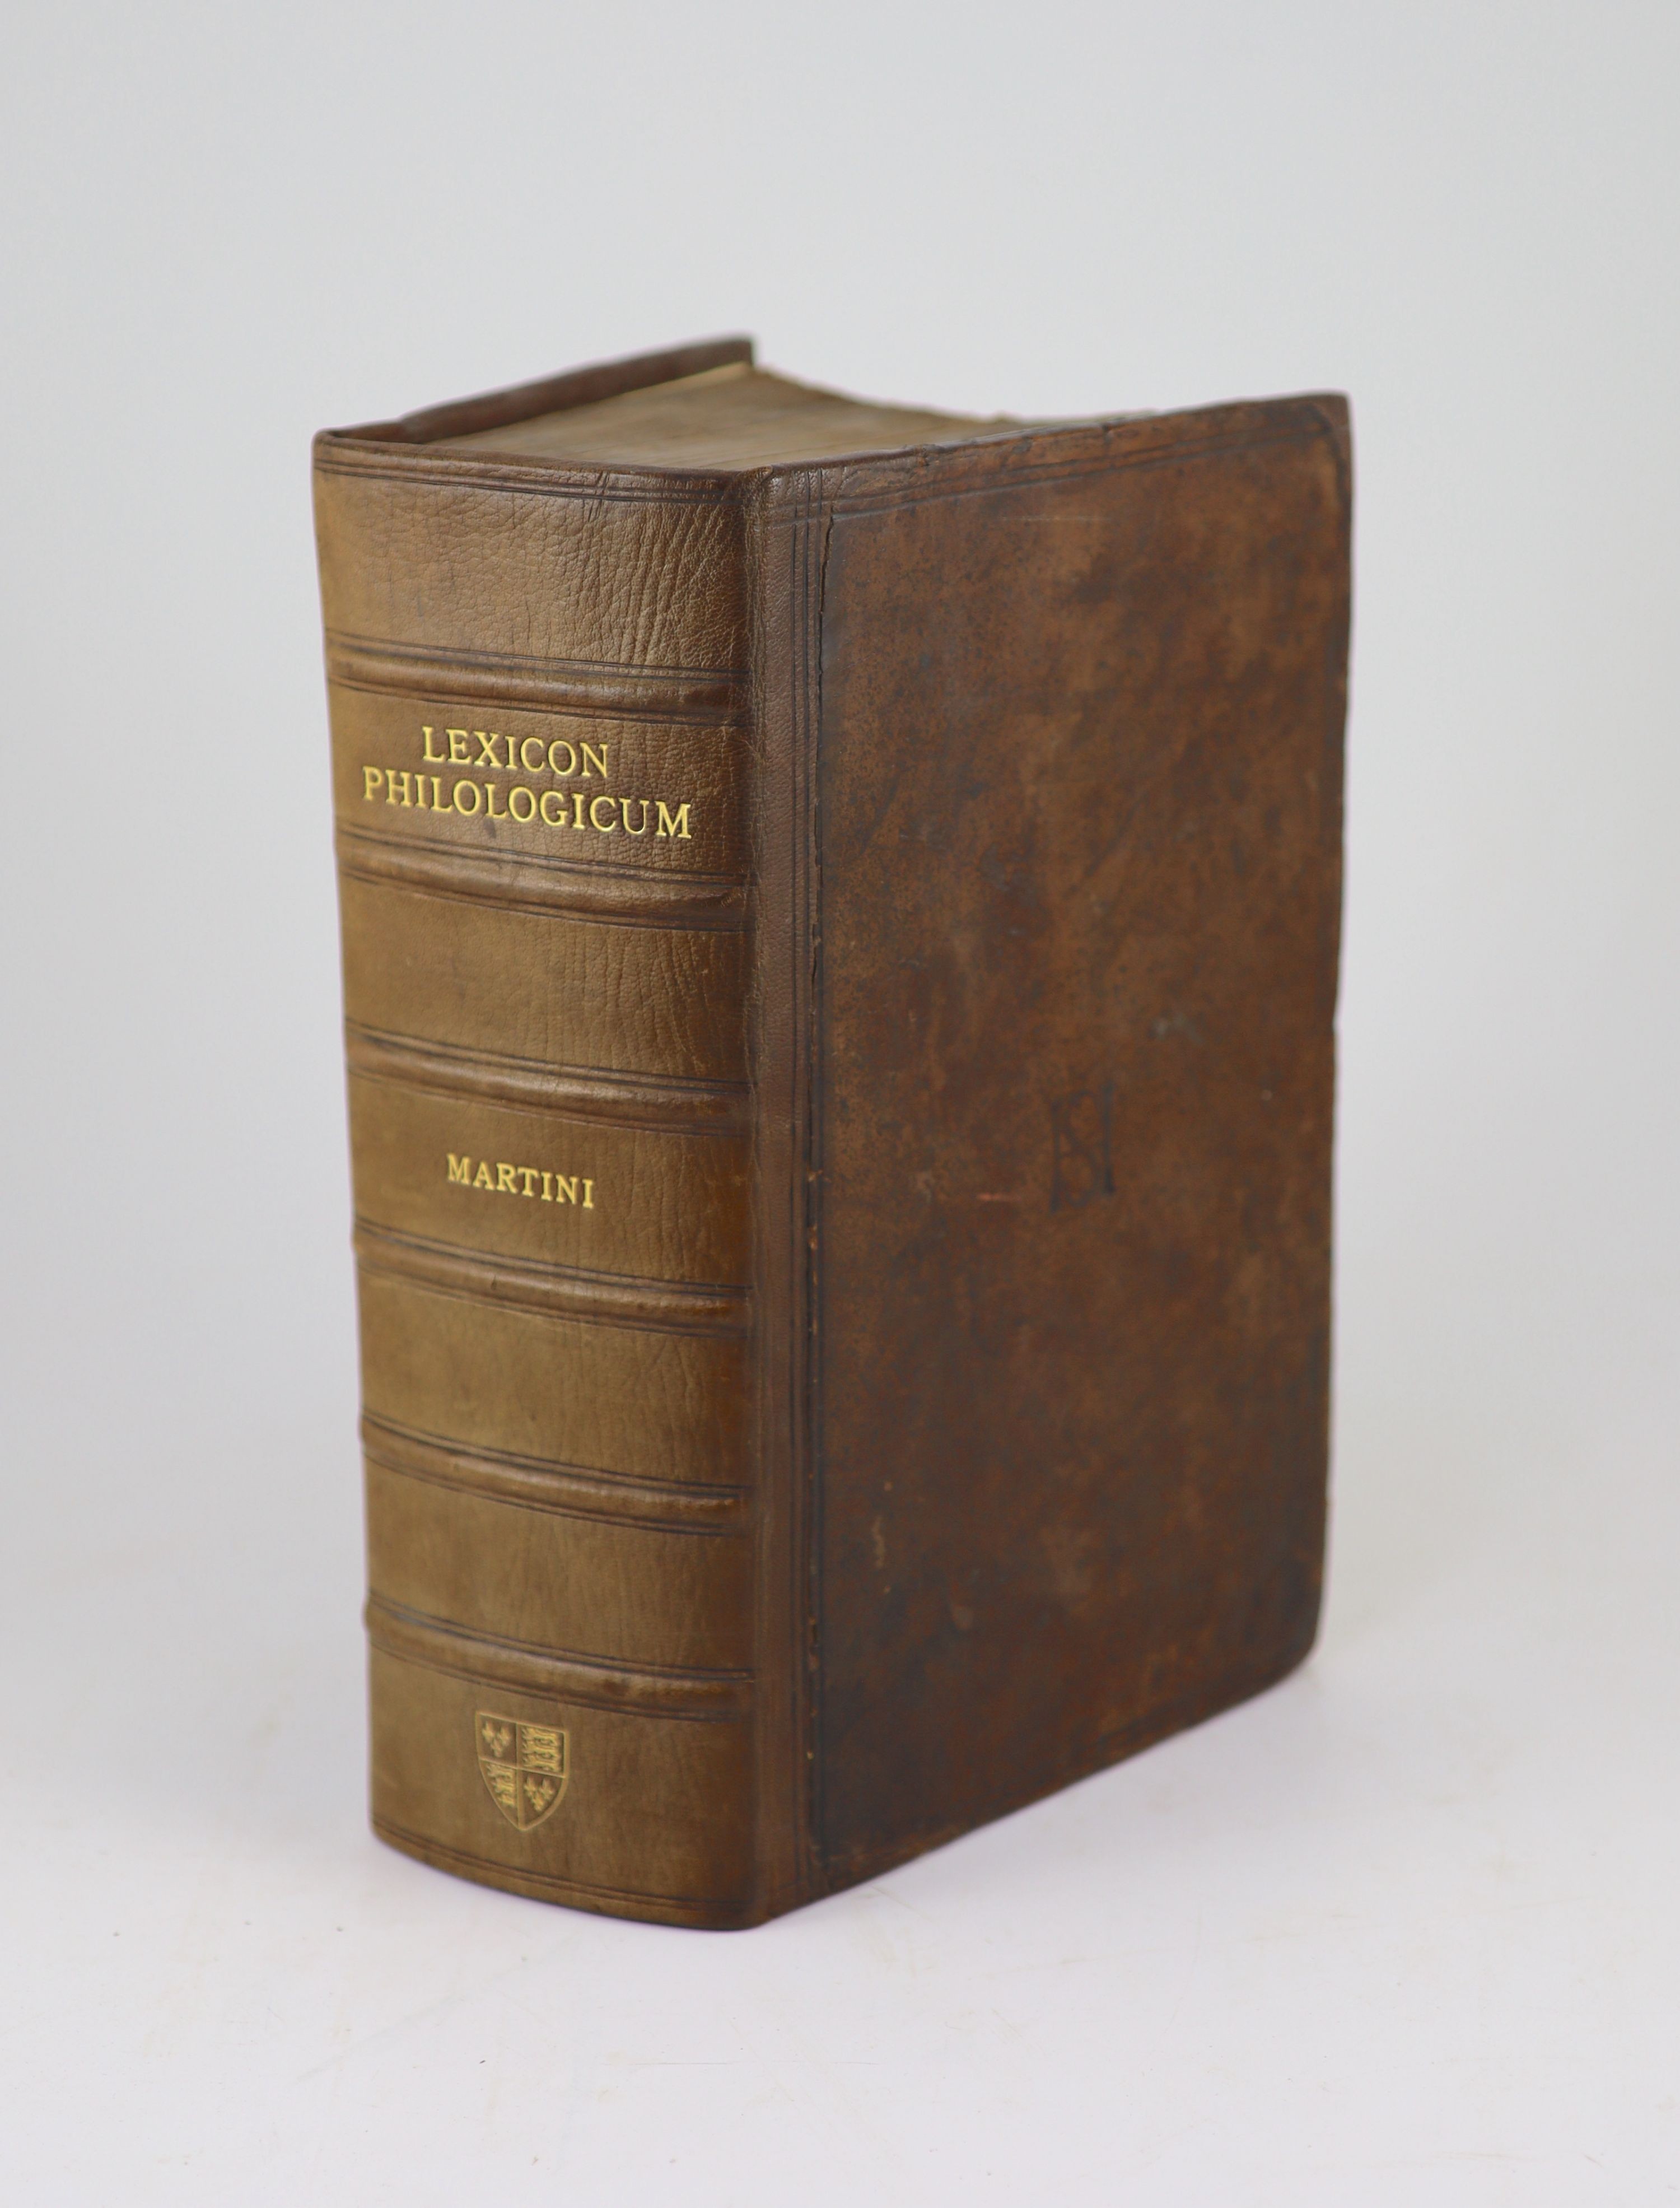 Martini, Matthias - Lexicon Philogicum Praecipue Etymologicum ... old calf, rebacked with gilt-lettered panelled spine, thick folio, Bremen, 1623